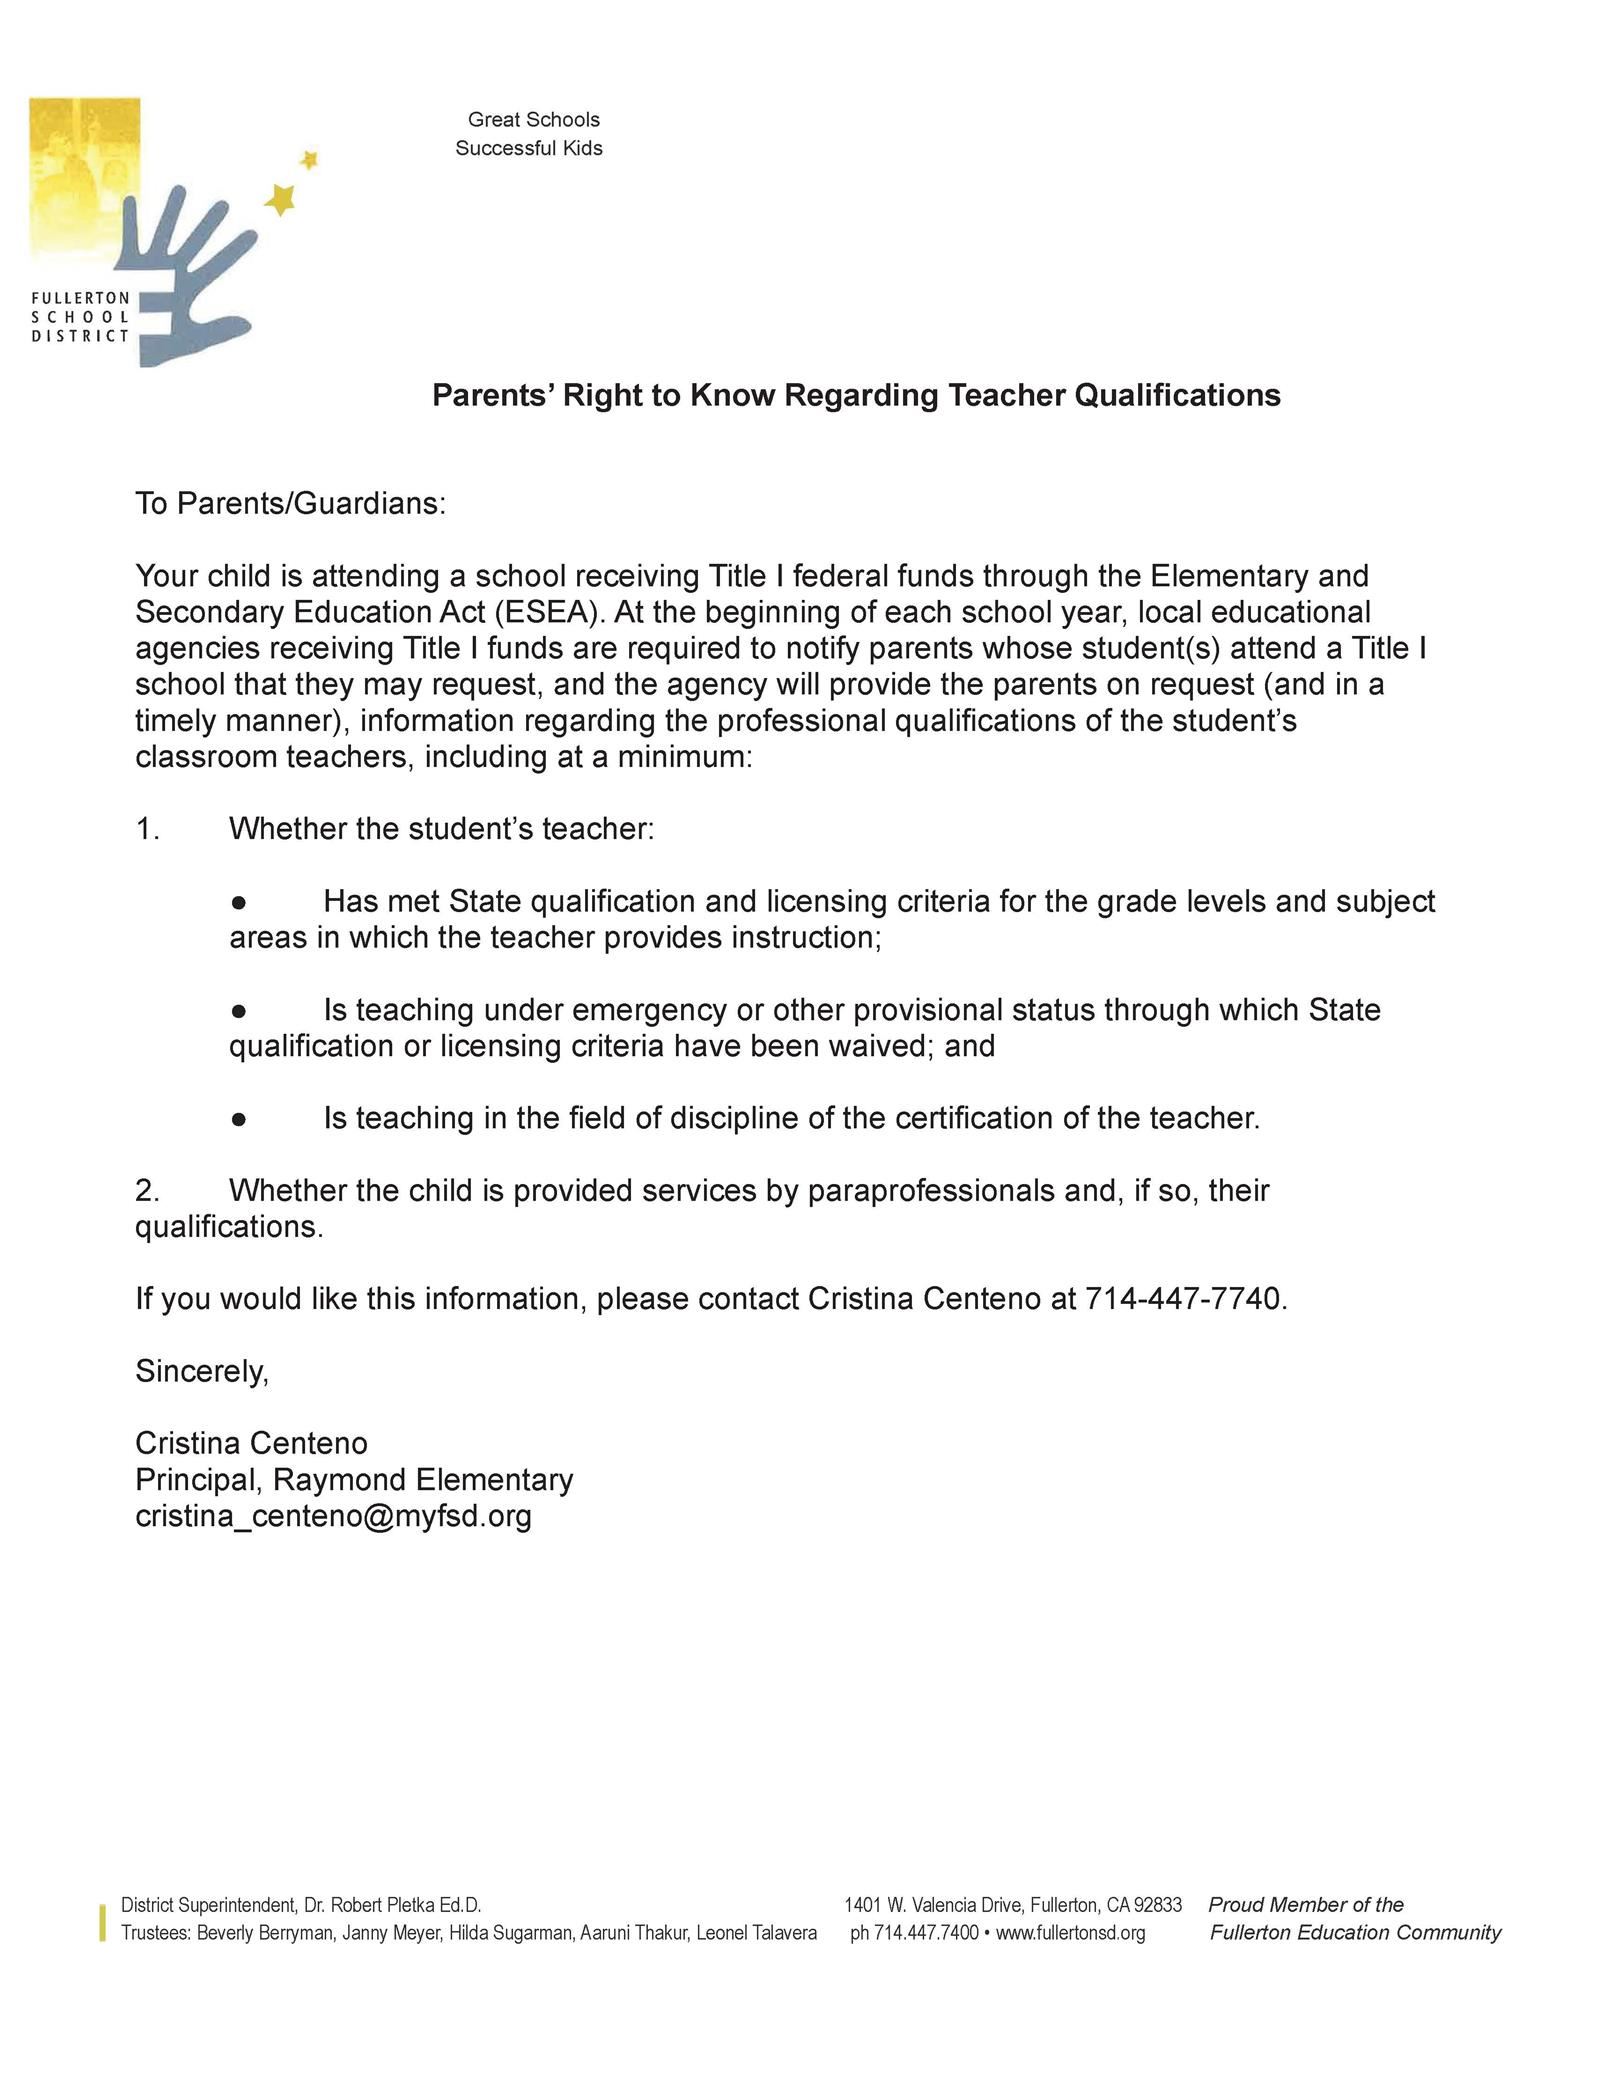  Raymond Title 1Teacher Qualification Letter